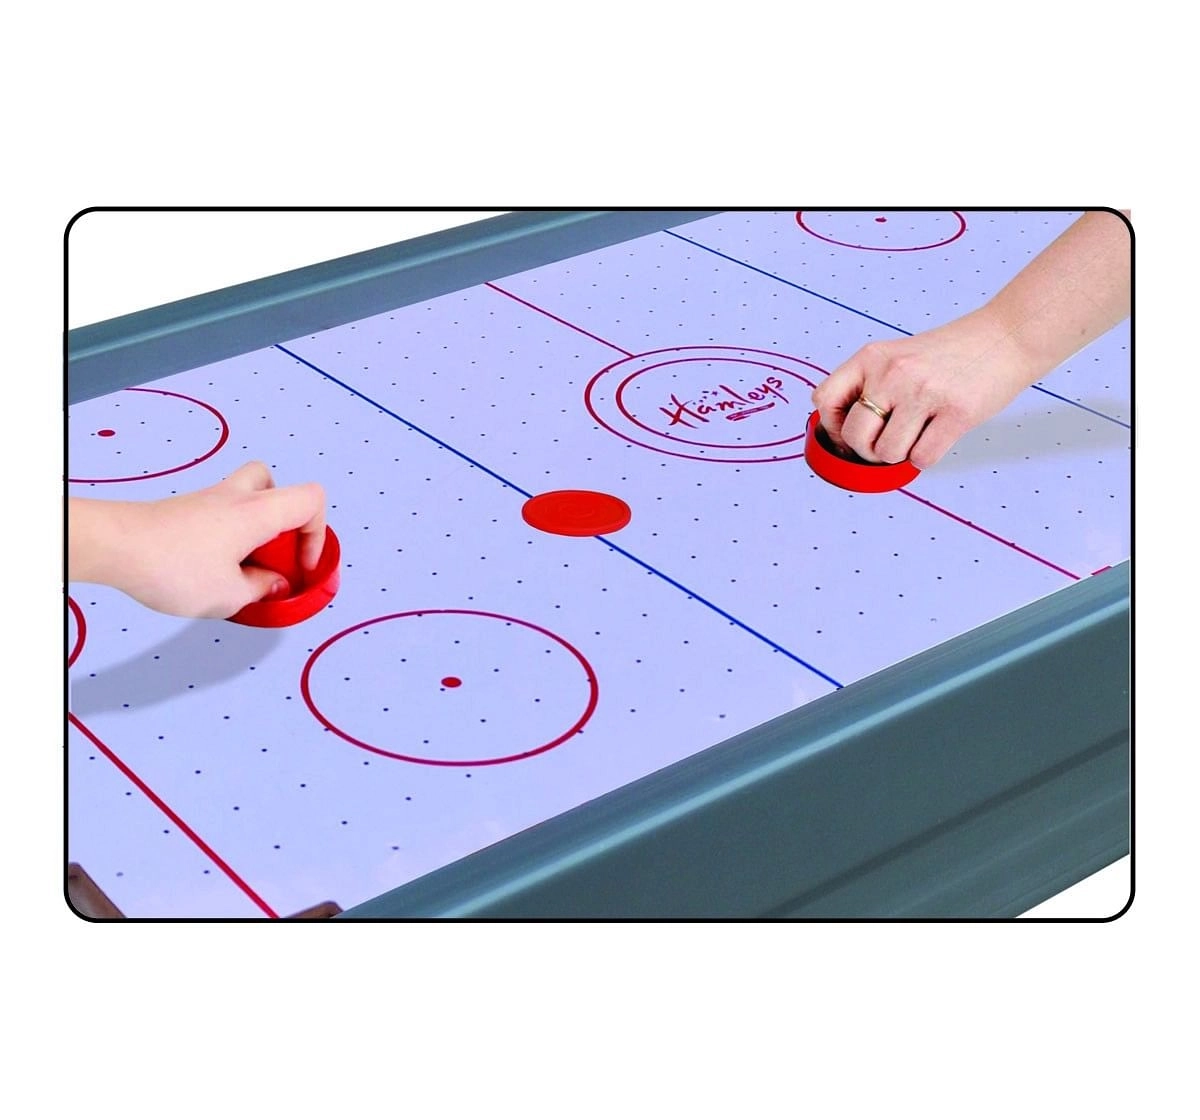 Hamleys Air Hockey Table with Adapter - Multicolor Fun for Kids, 3Y+